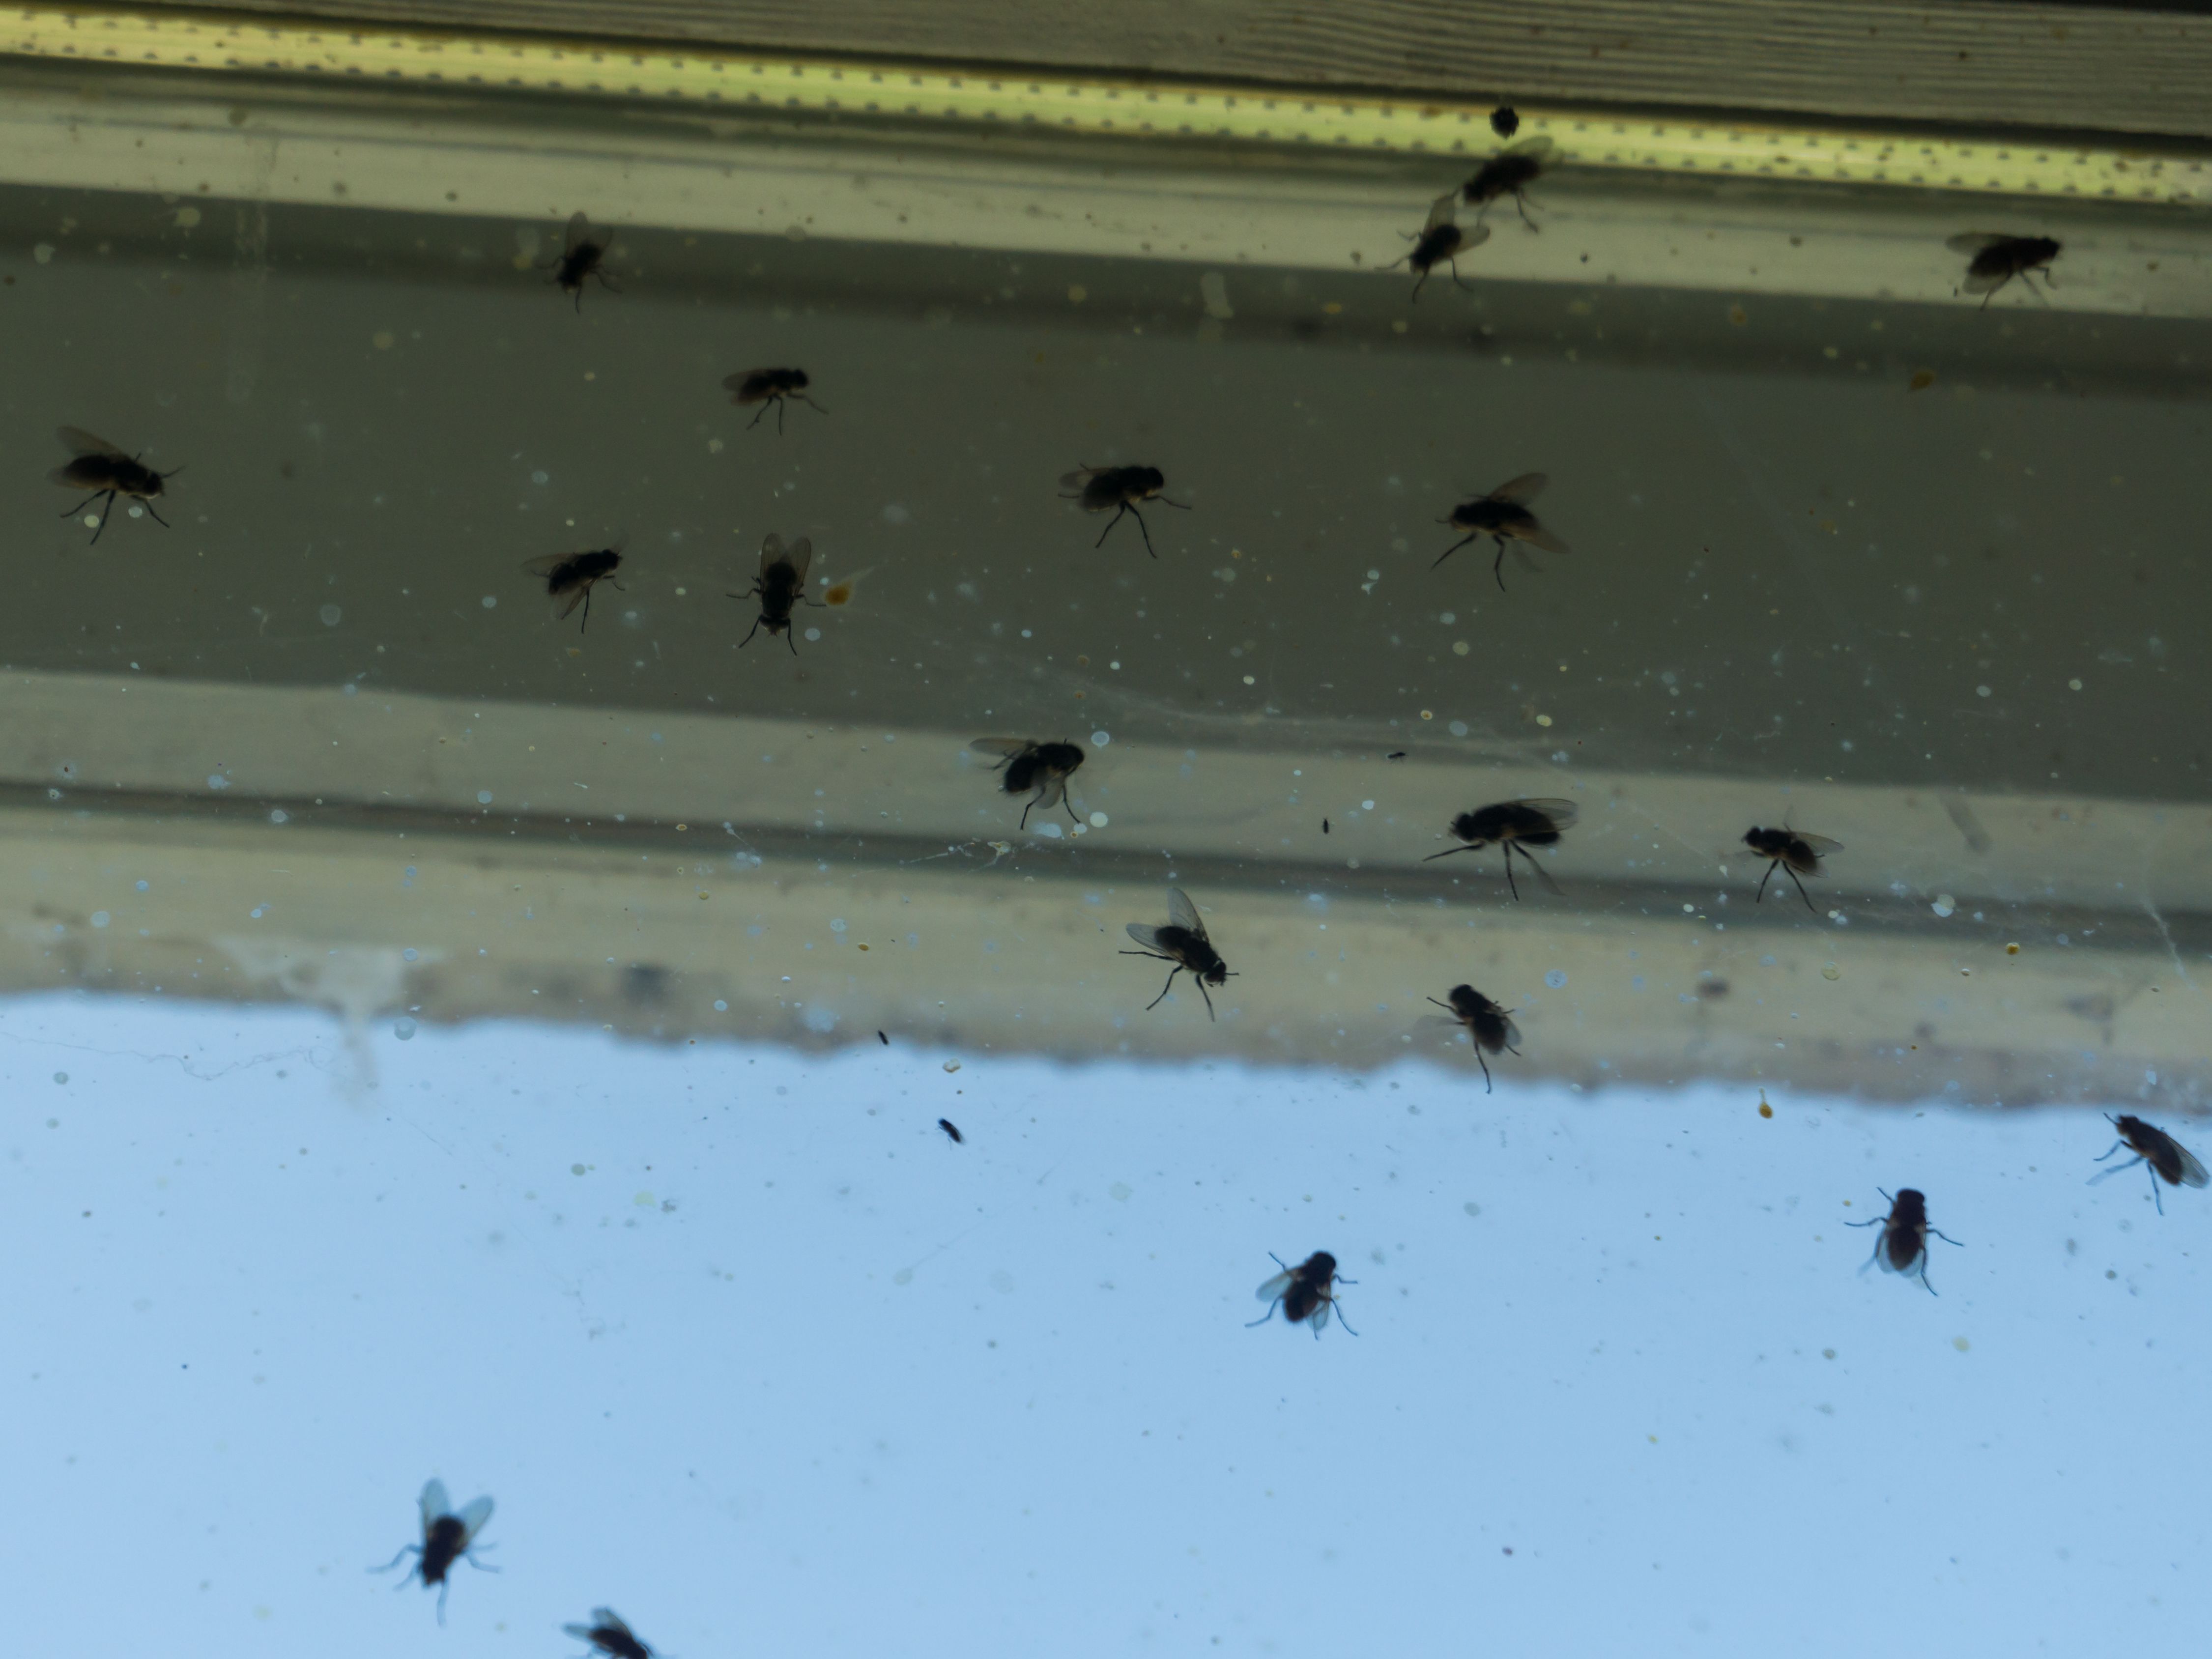 Kills flies invisibly inside windows